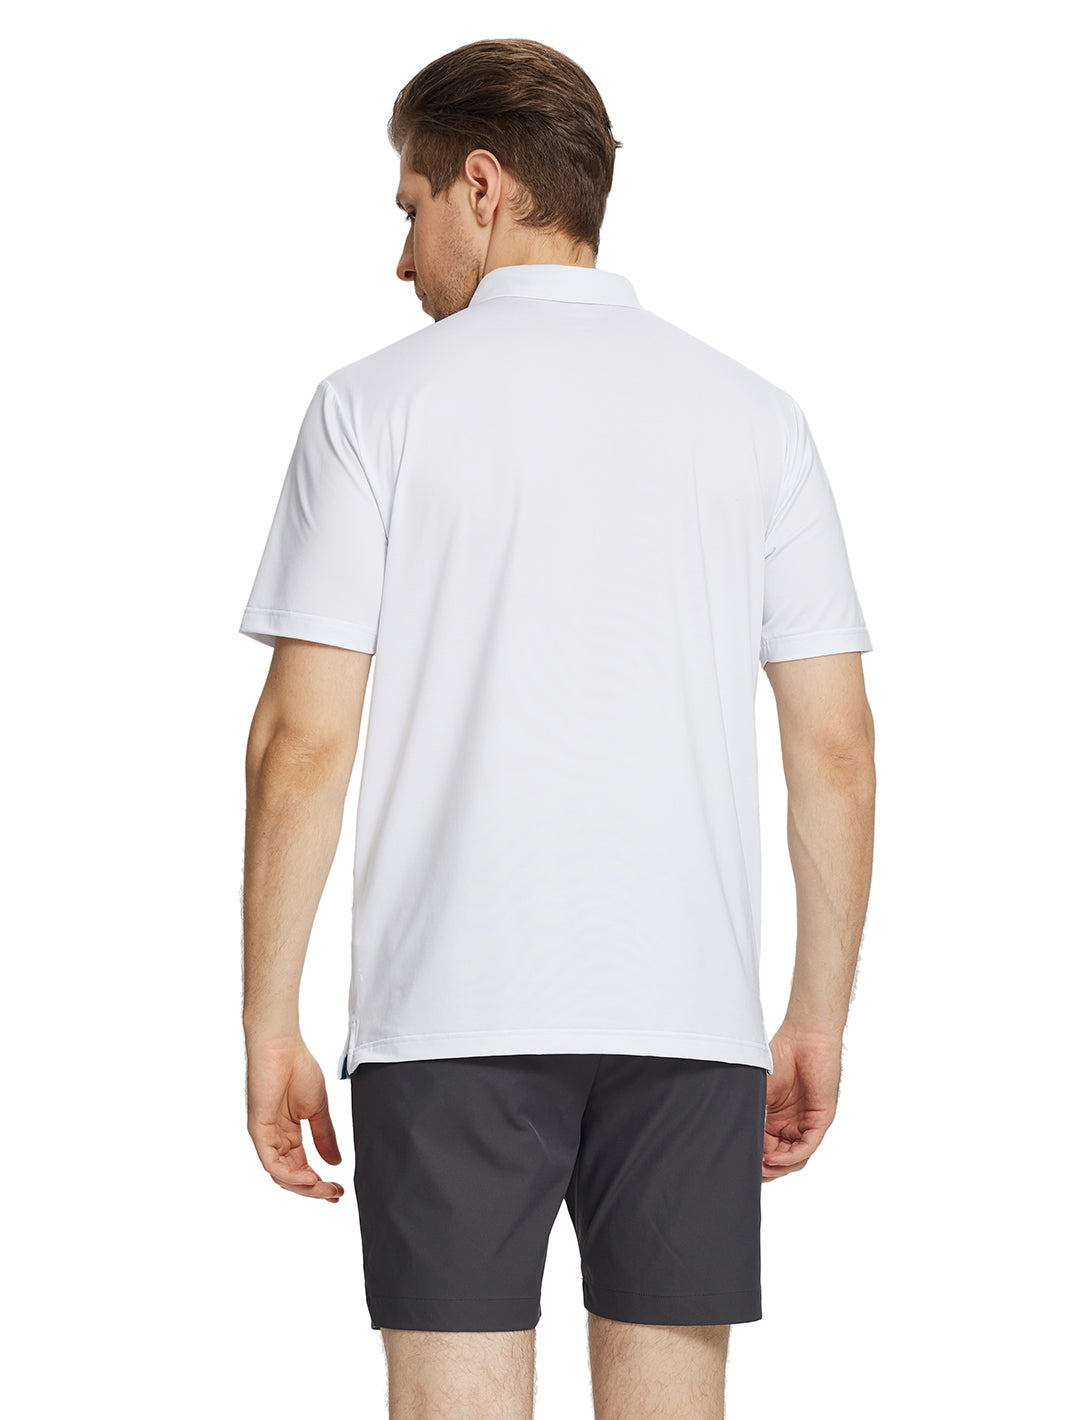 Men's Striped Print Golf Polo Shirts-White1